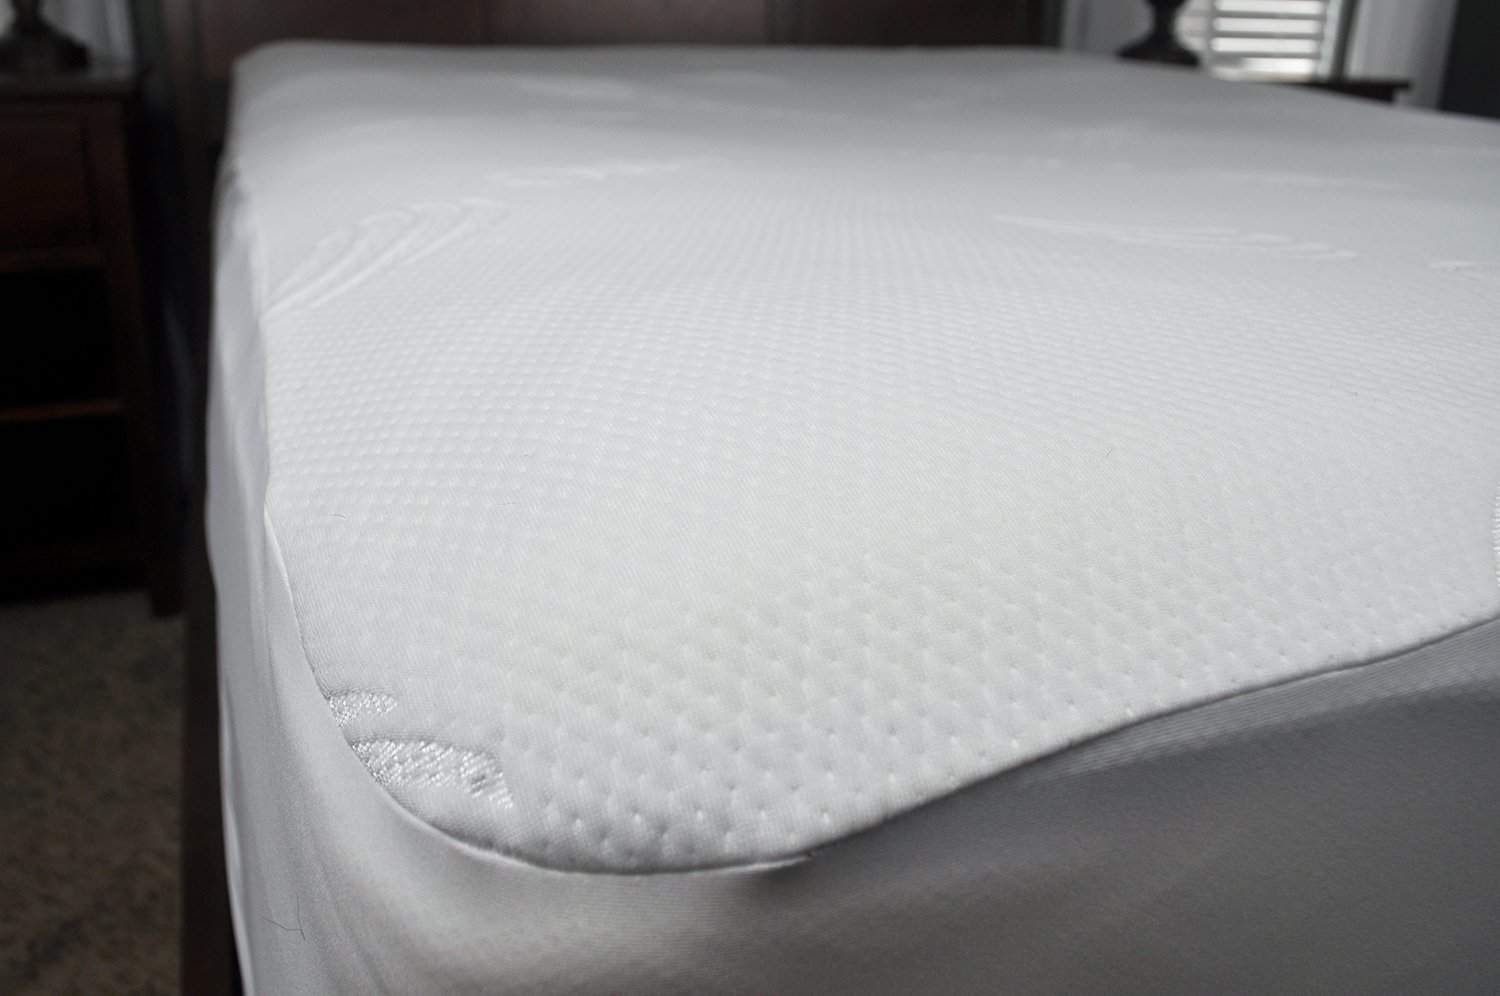 slumbercloud dryline mattress protector amazon